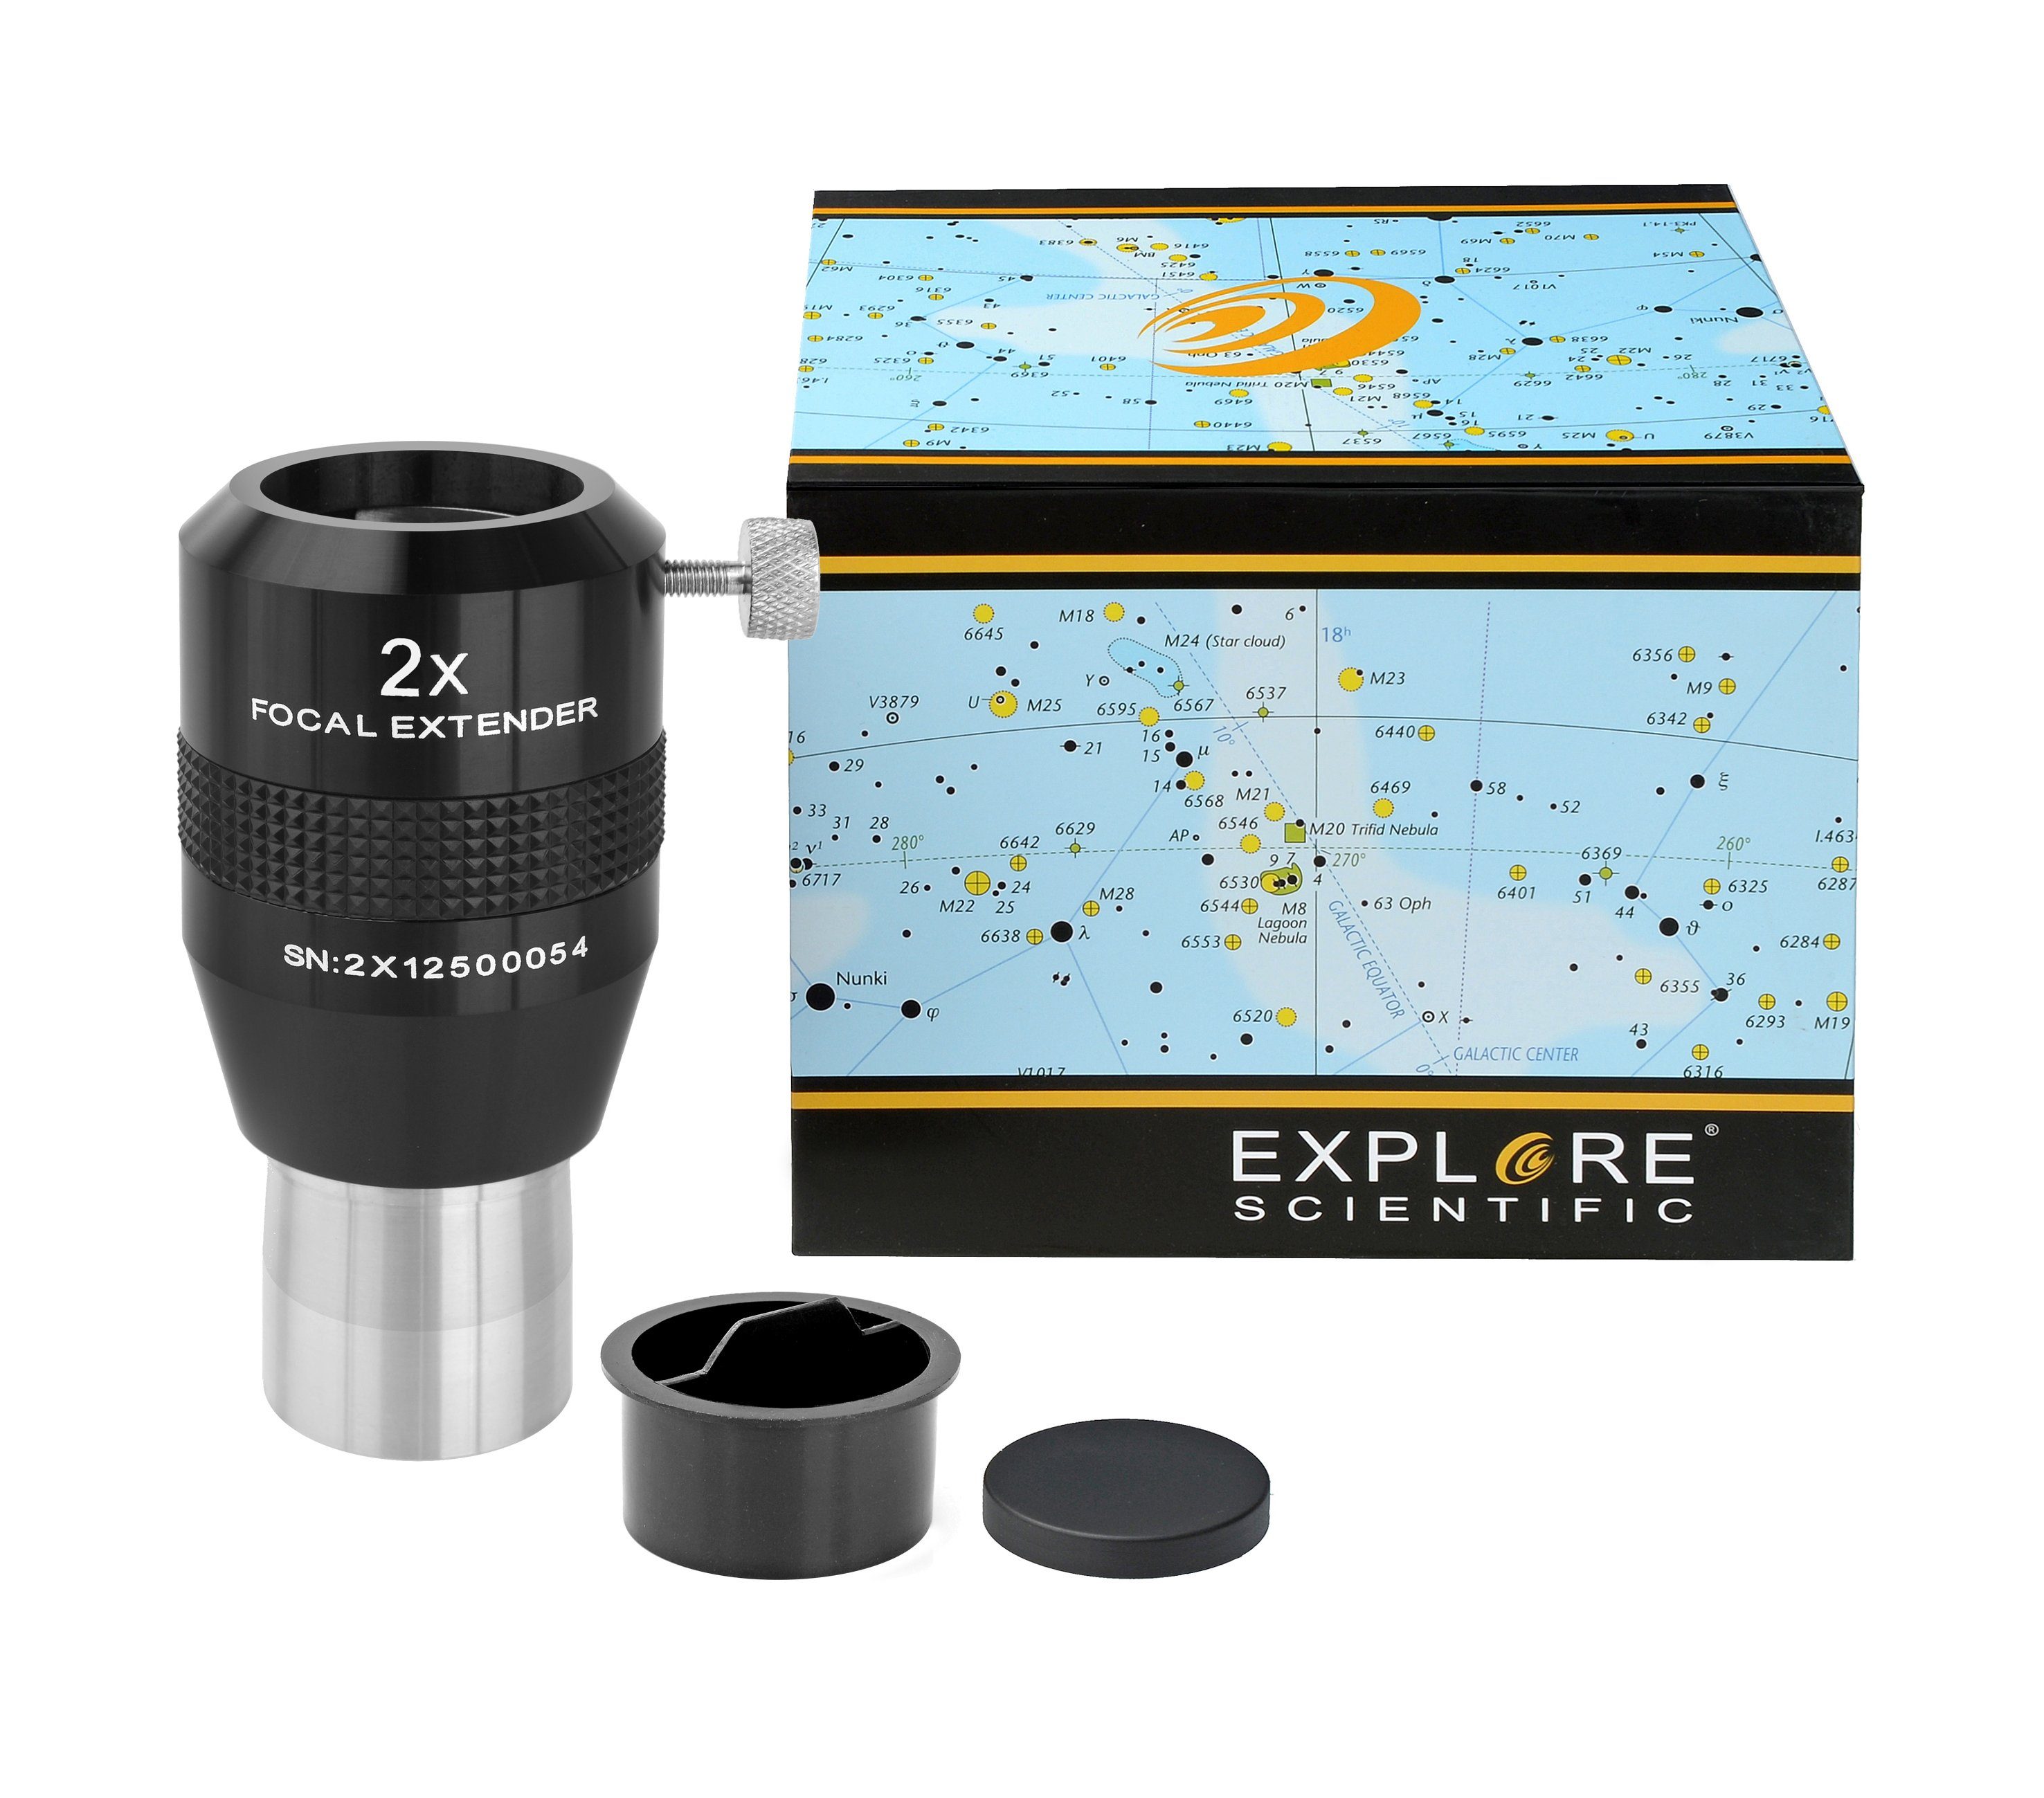 EXPLORE SCIENTIFIC Teleskop Fokal Extender 2x 31.7mm/1.25"